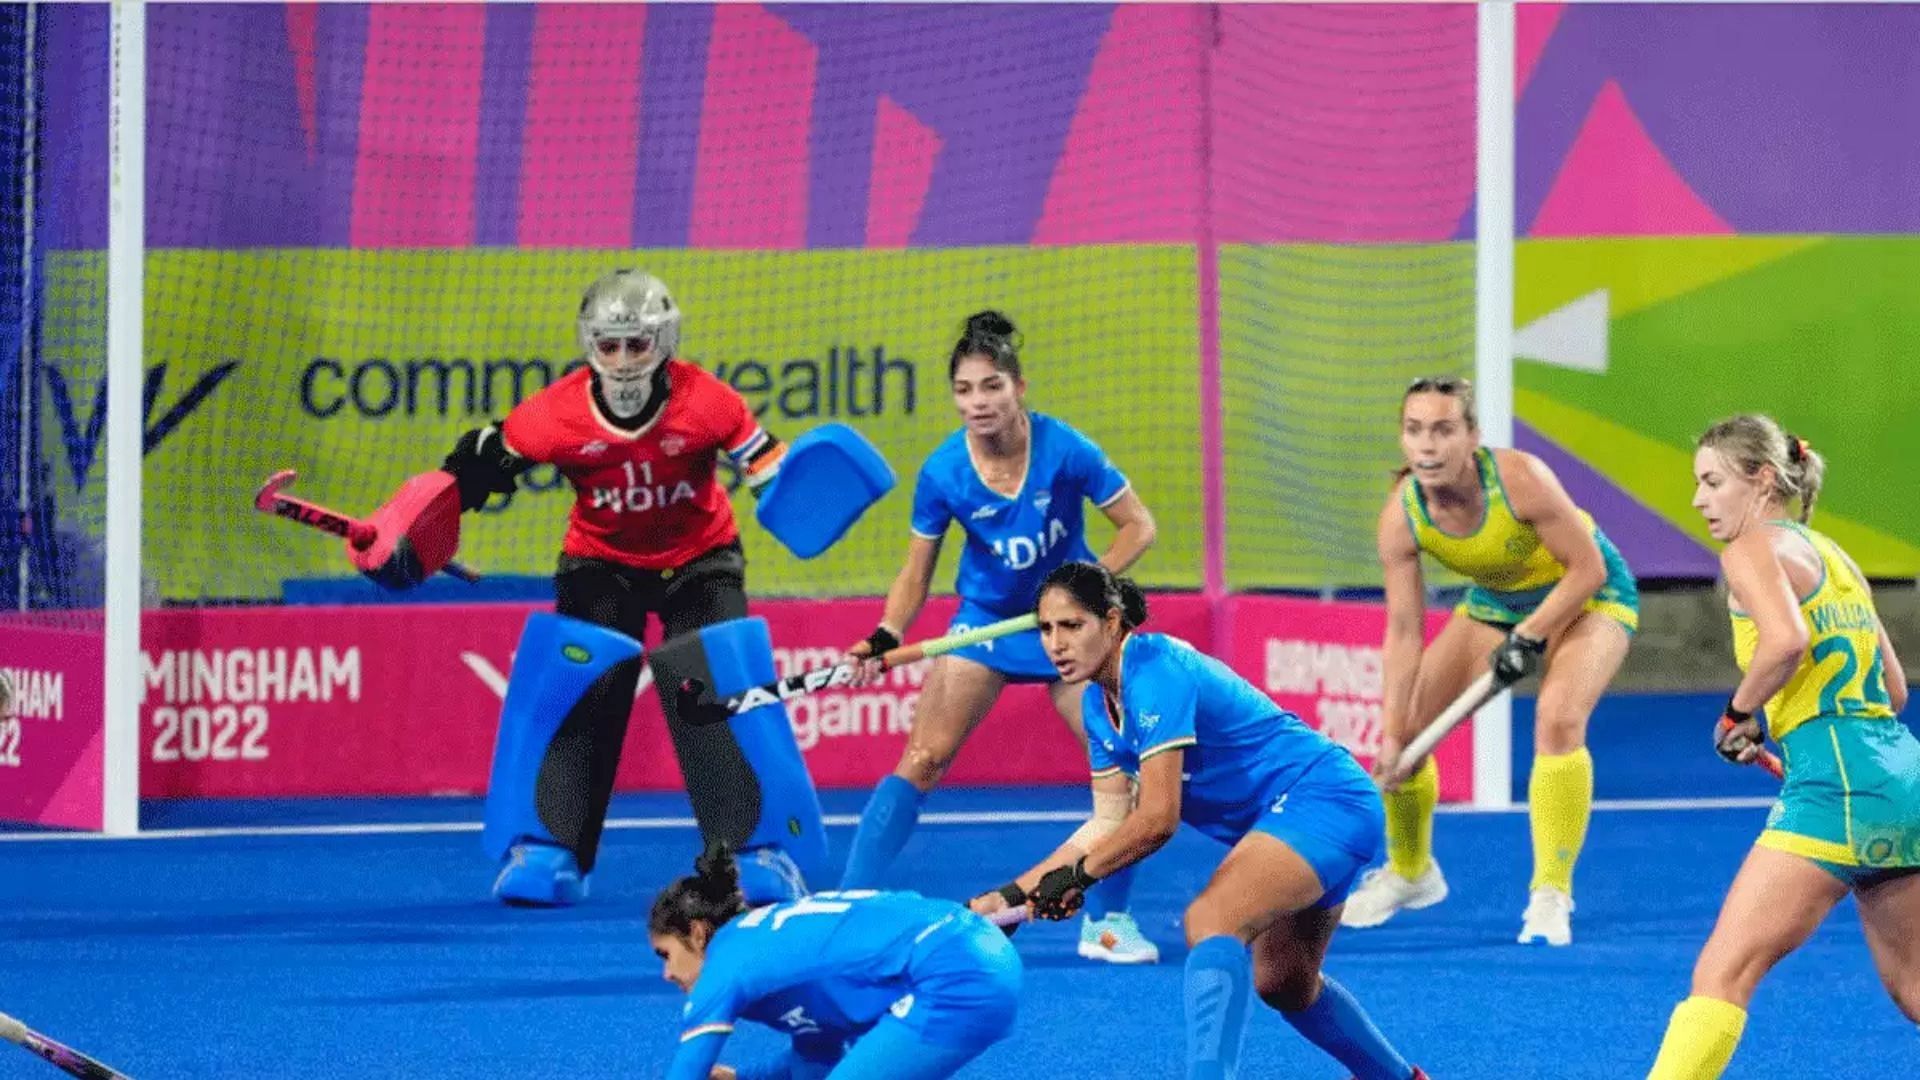 <div class="paragraphs"><p>India women's hockey team during their sem-final clash against Australia at 2022 Commonwealth Games in Birmingham.&nbsp;</p></div>